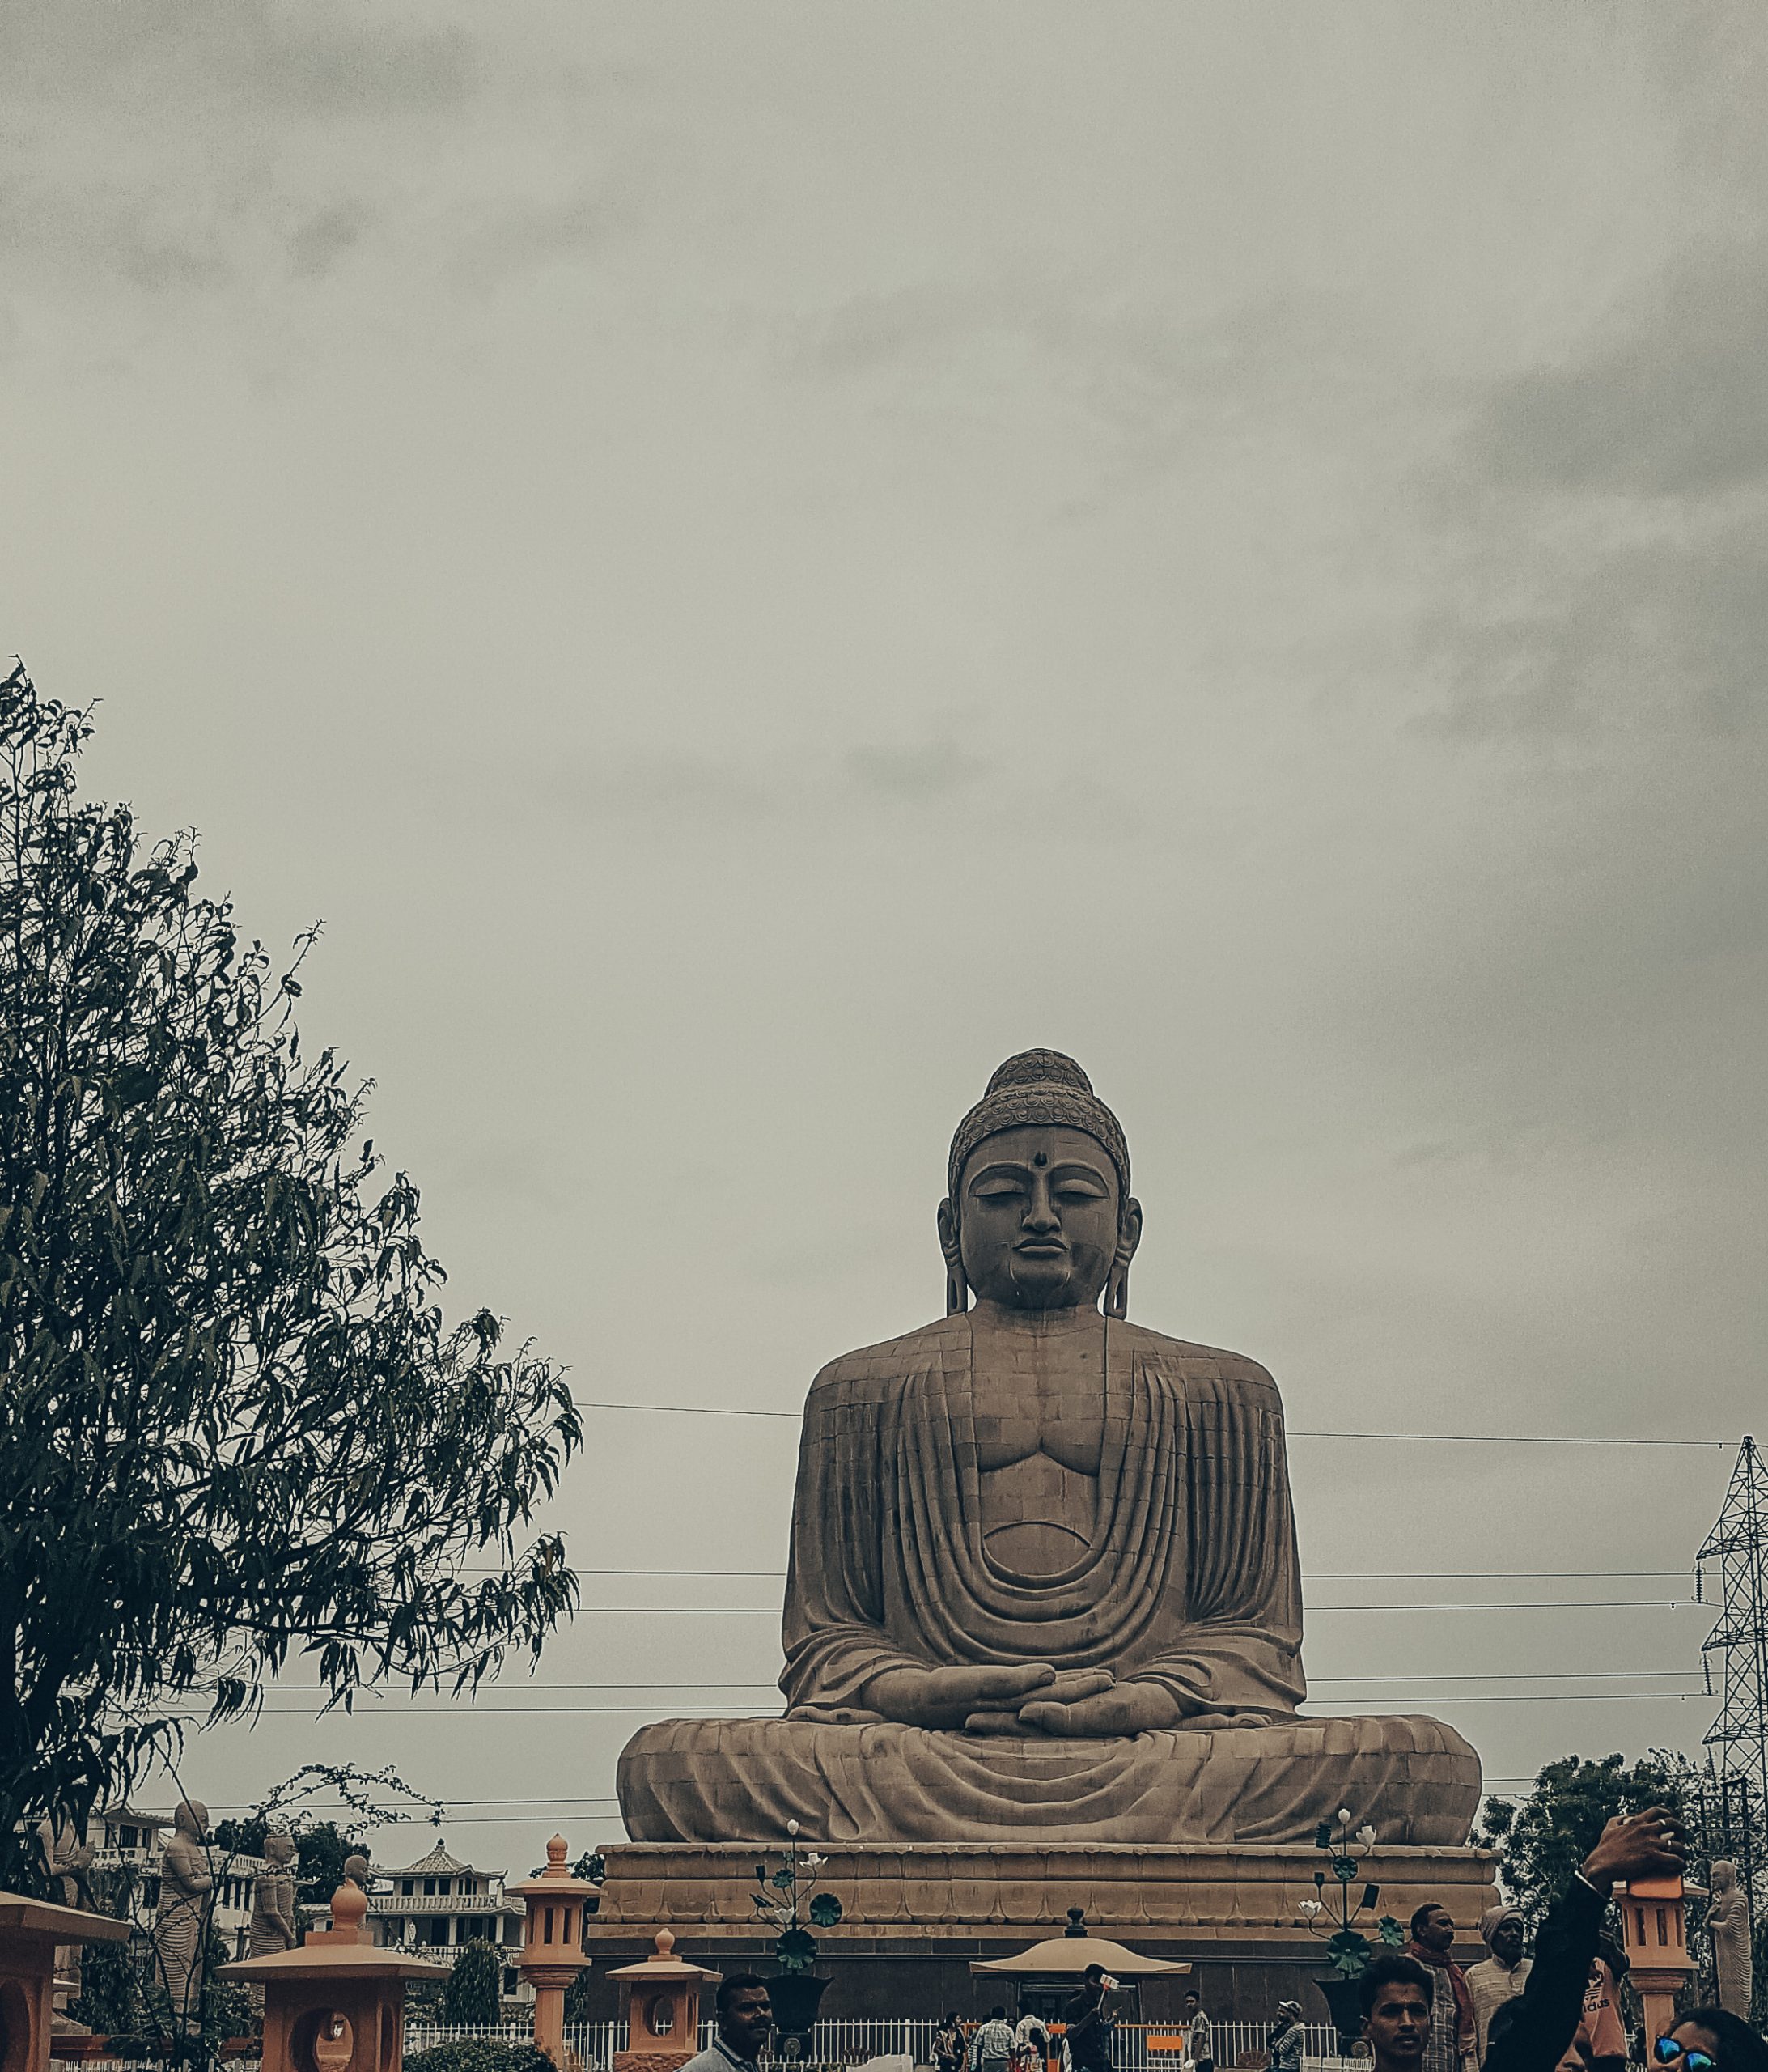 A giant Buddha statue